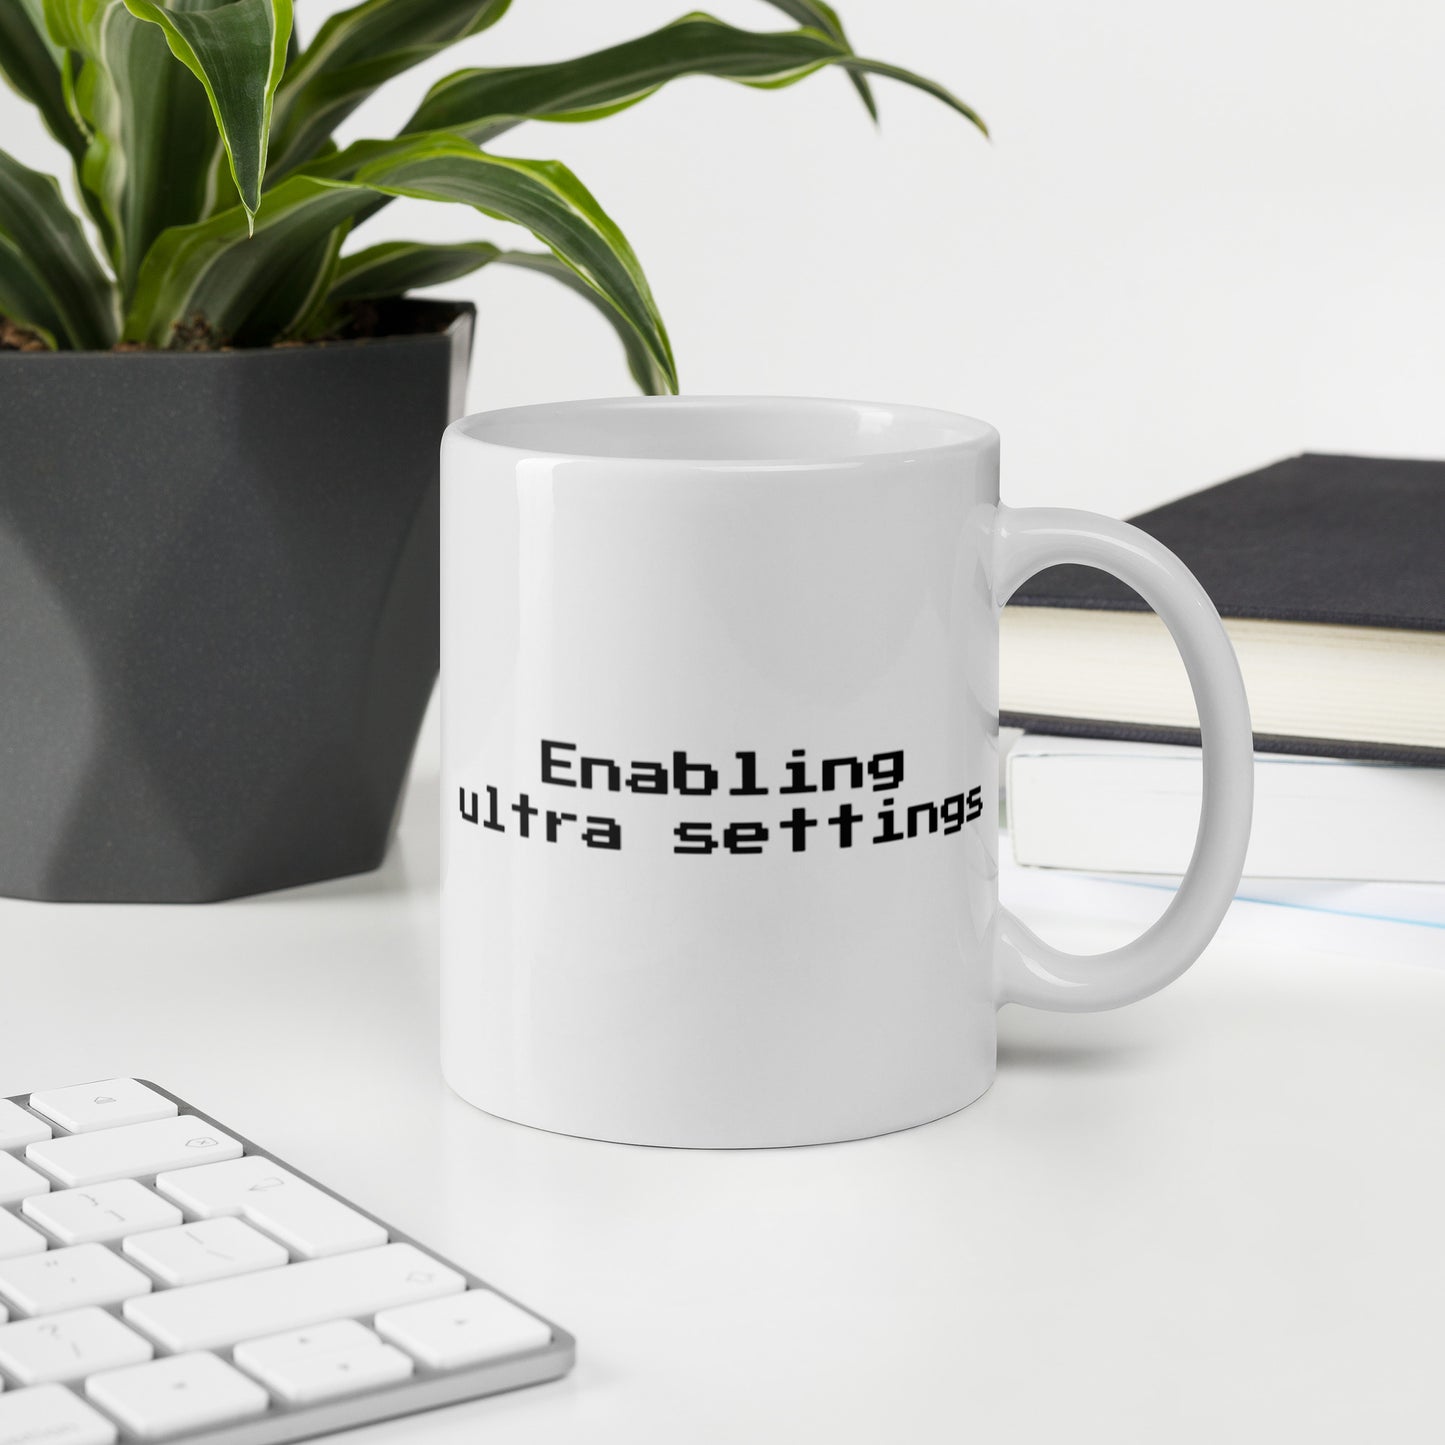 Enabling ultra settings - Mug